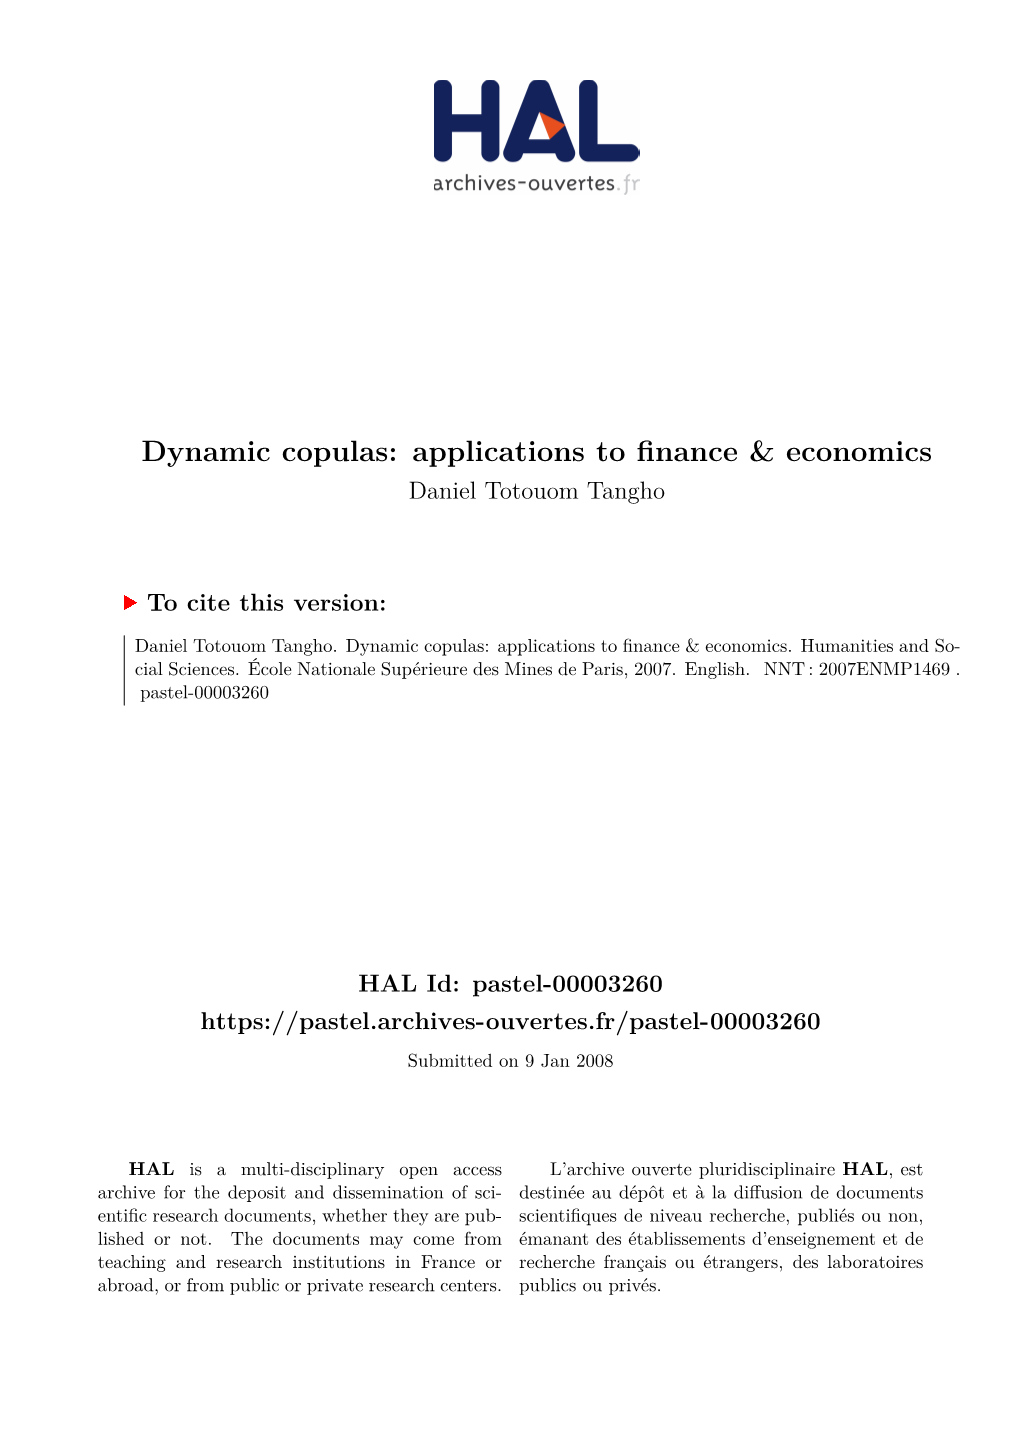 Dynamic Copulas: Applications to Finance & Economics